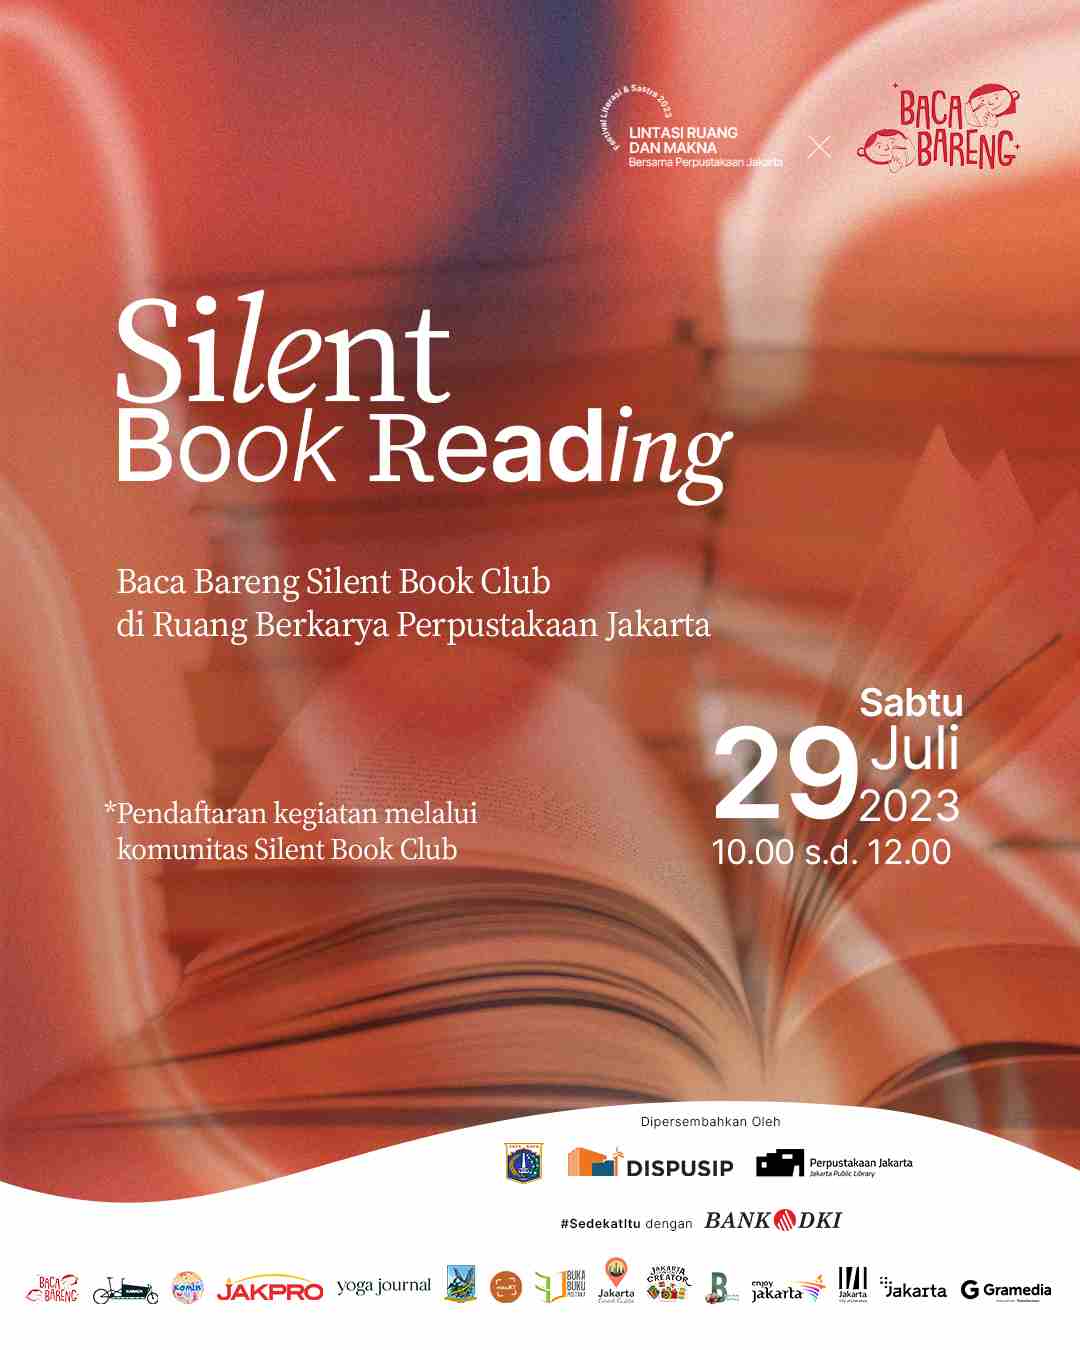 Baca Bareng Silent Book Club